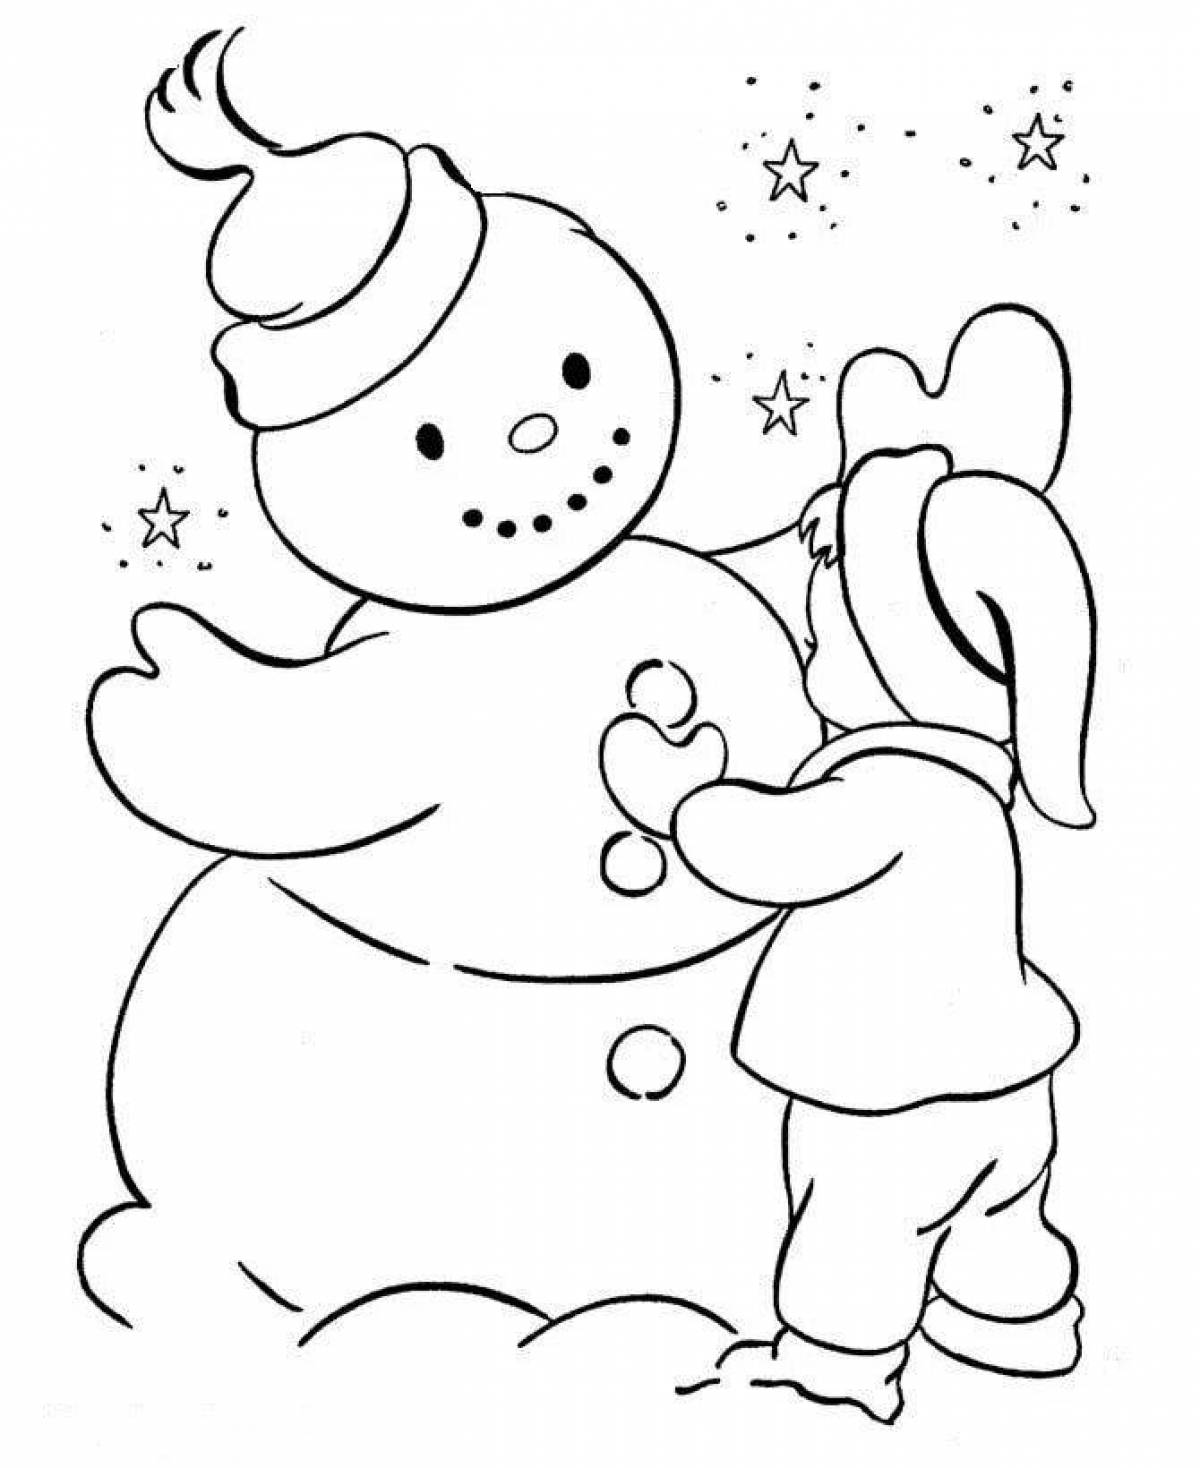 Nice snowman coloring book